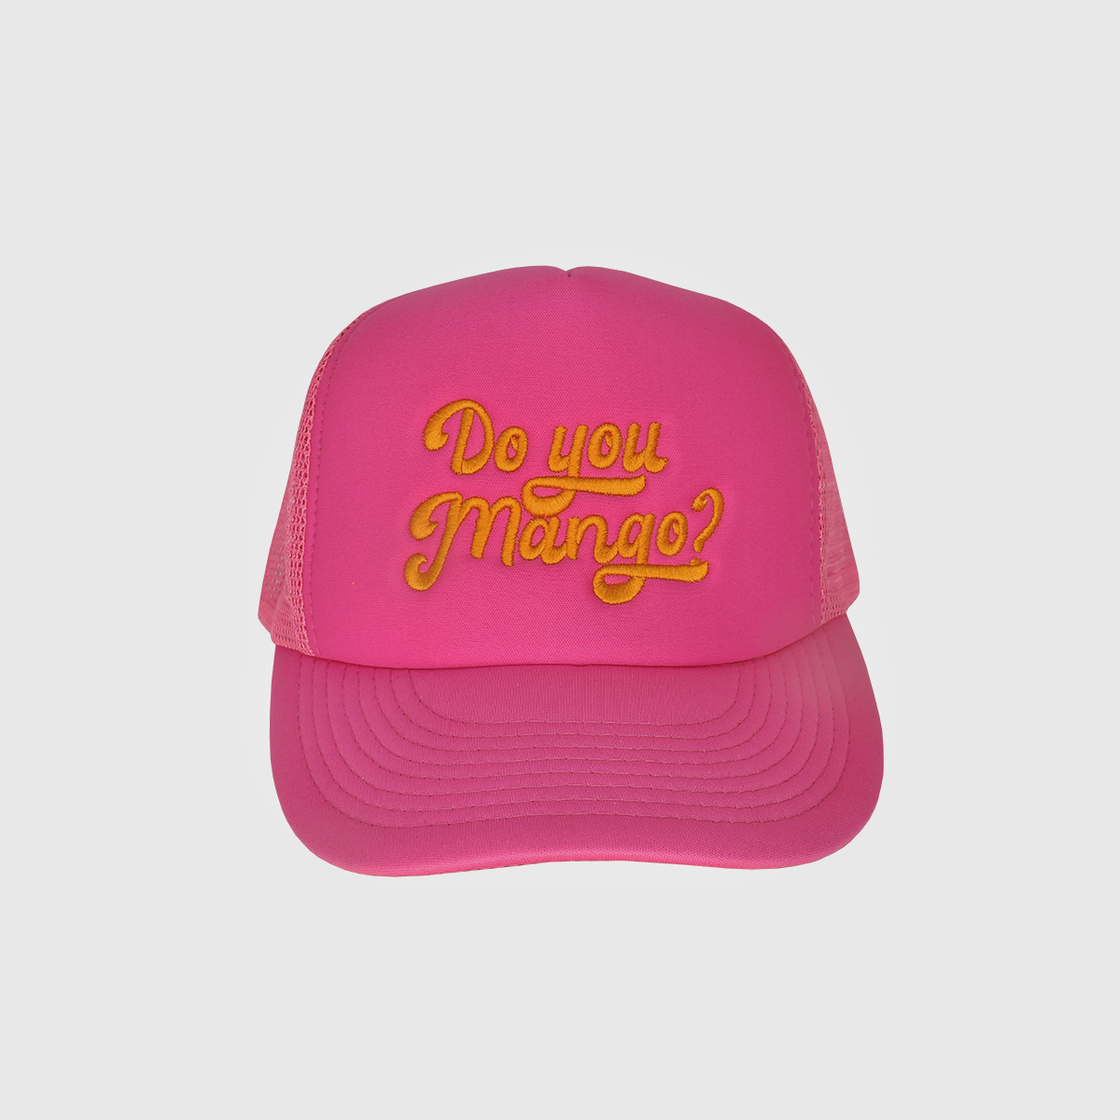 “Do you Mango?” Trucker Hat